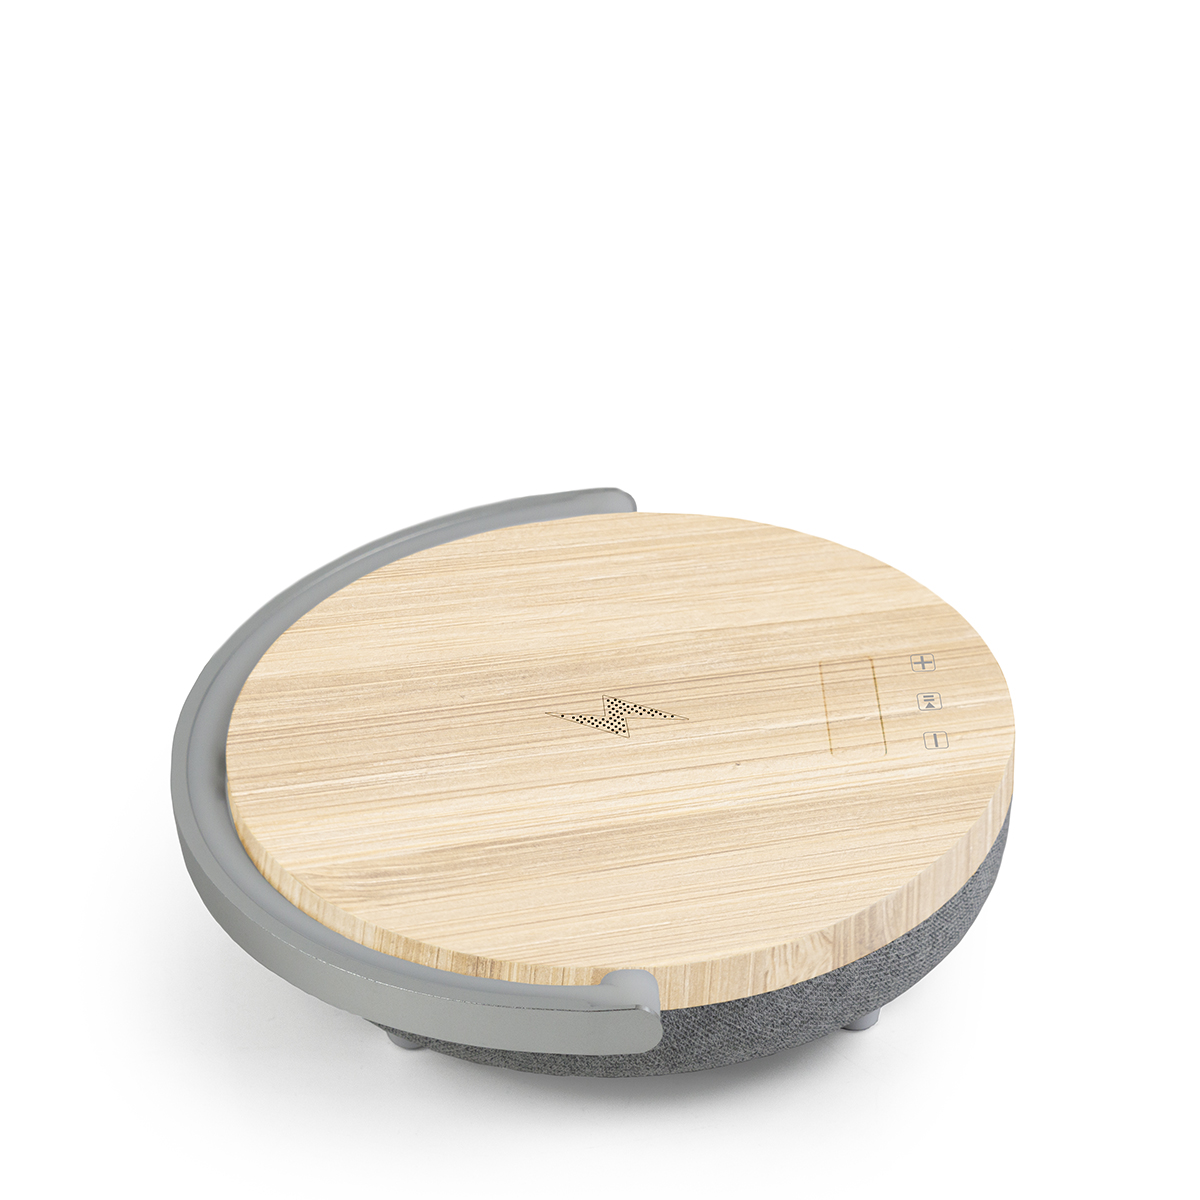 PRIXTON Speaker Light Holz Wood Bluetooth-Lautsprecher